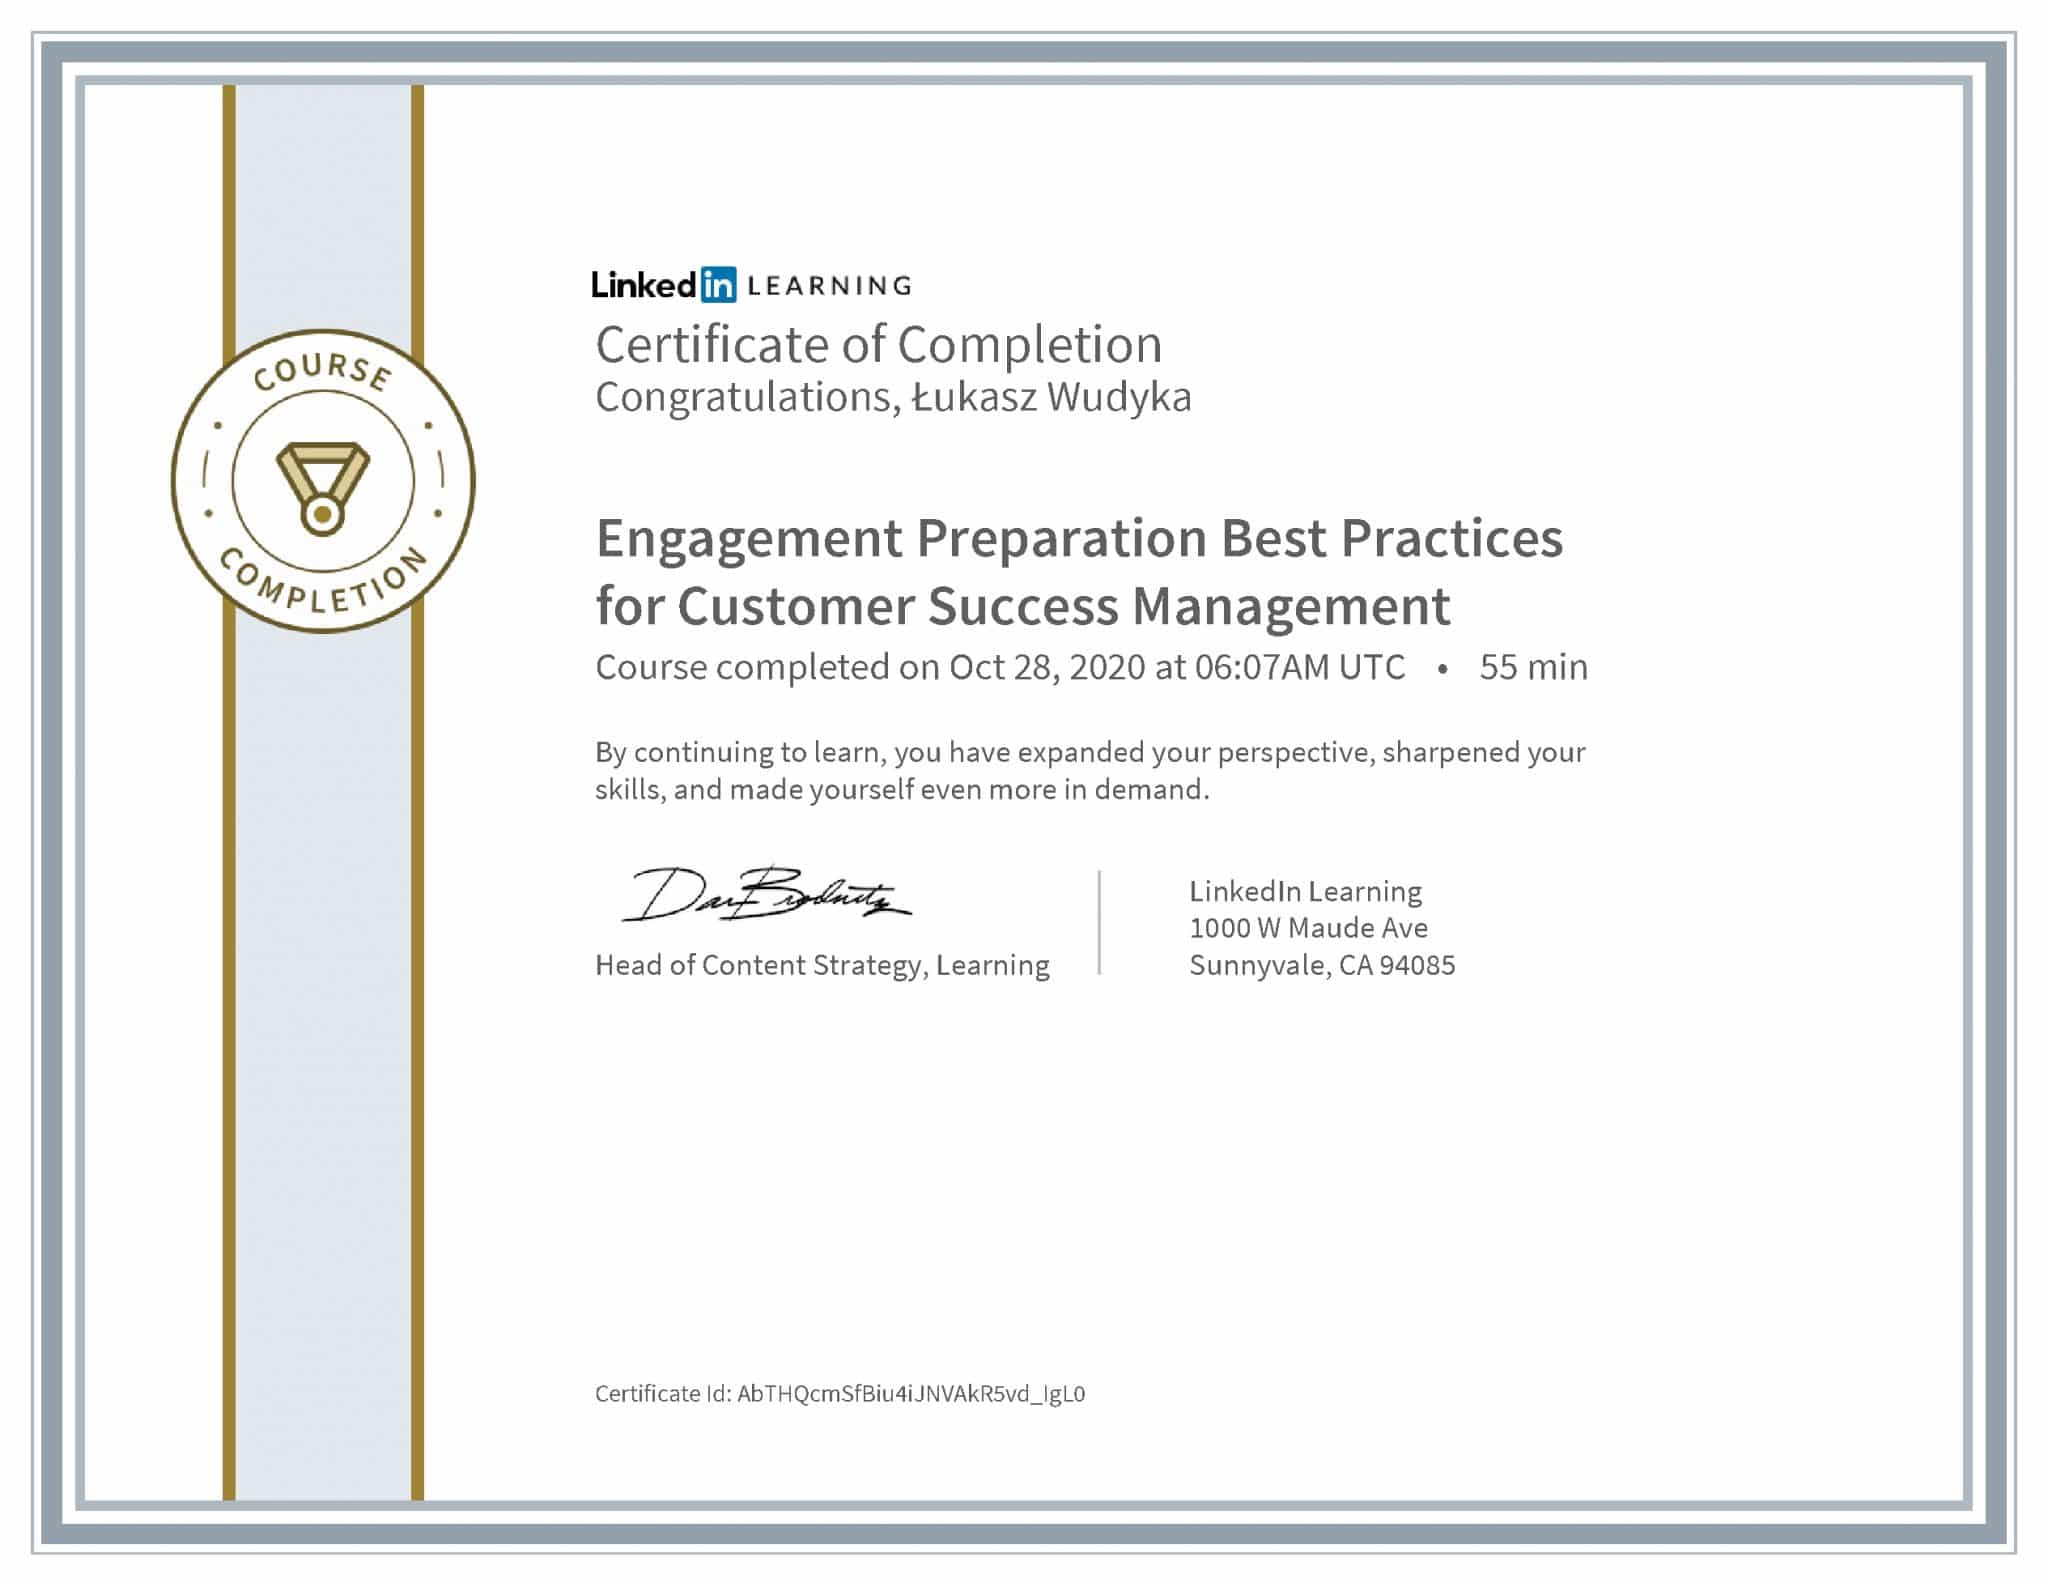 Łukasz Wudyka certyfikat LinkedIn Engagement Preparation Best Practices for Customer Success Management